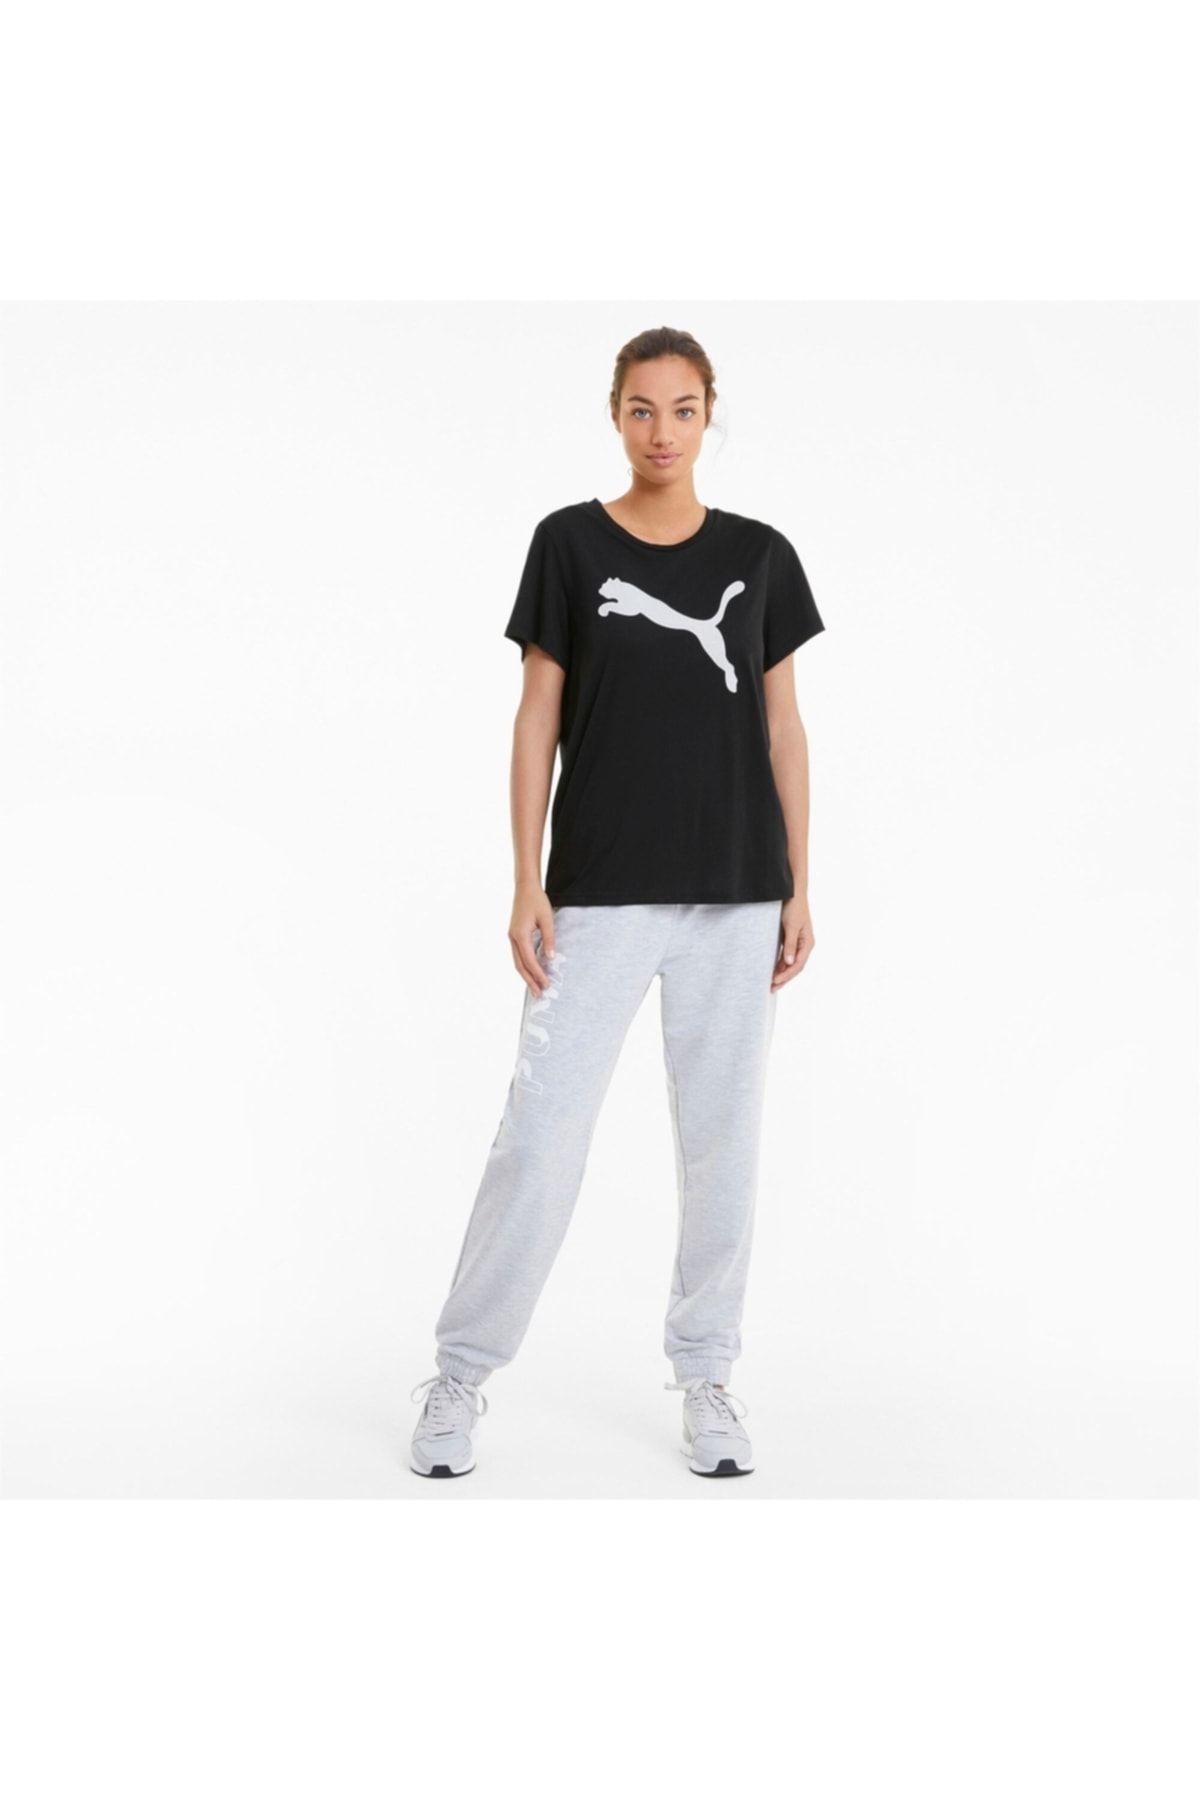 Puma Evostrıpe Tee Kadın T-shirt Black 585941-01